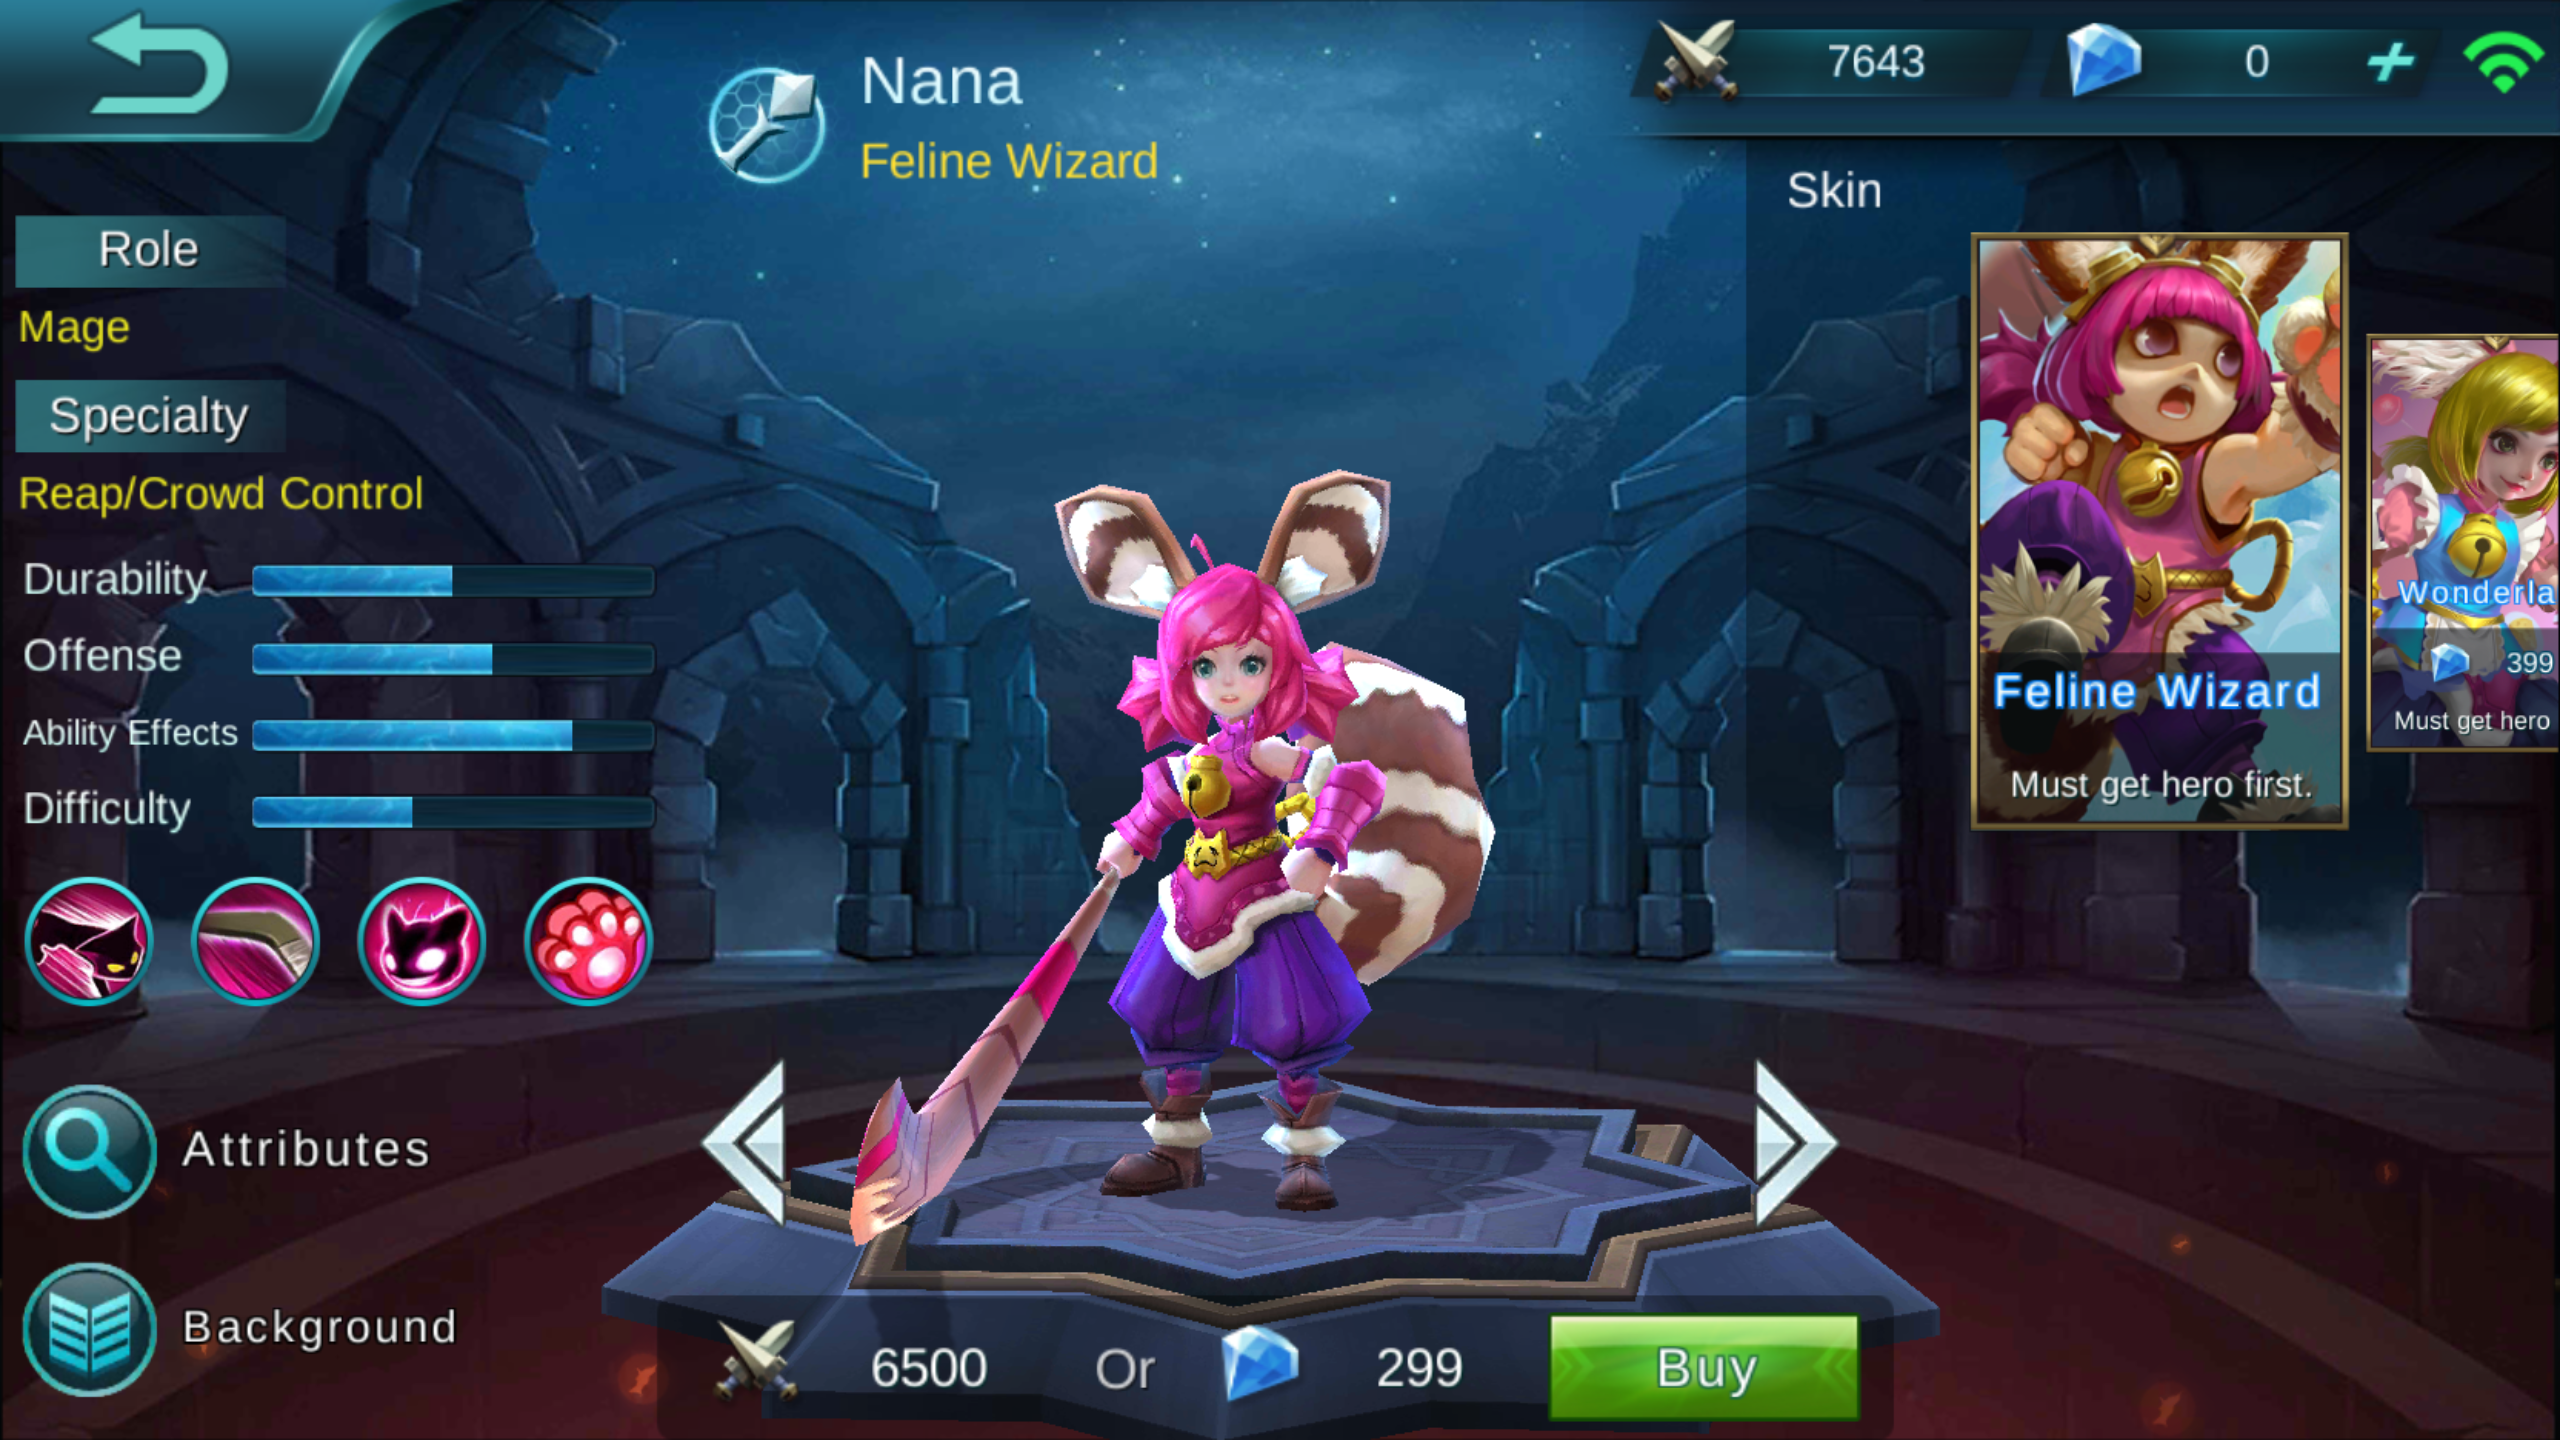 Nana Feline Wizard Review [Mobile Legends: Bang Bang]